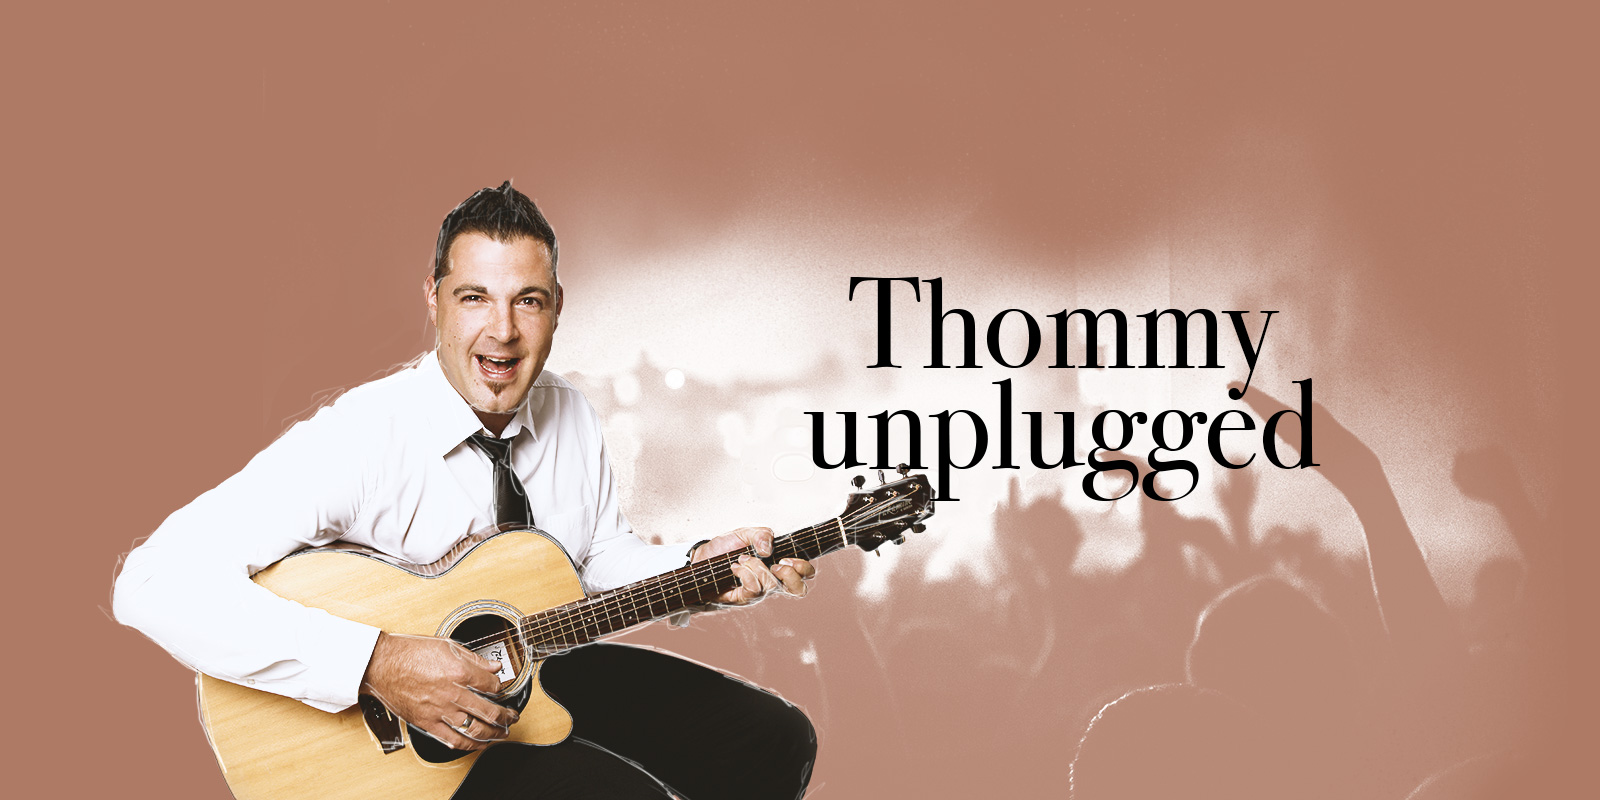 Thommy unplugged